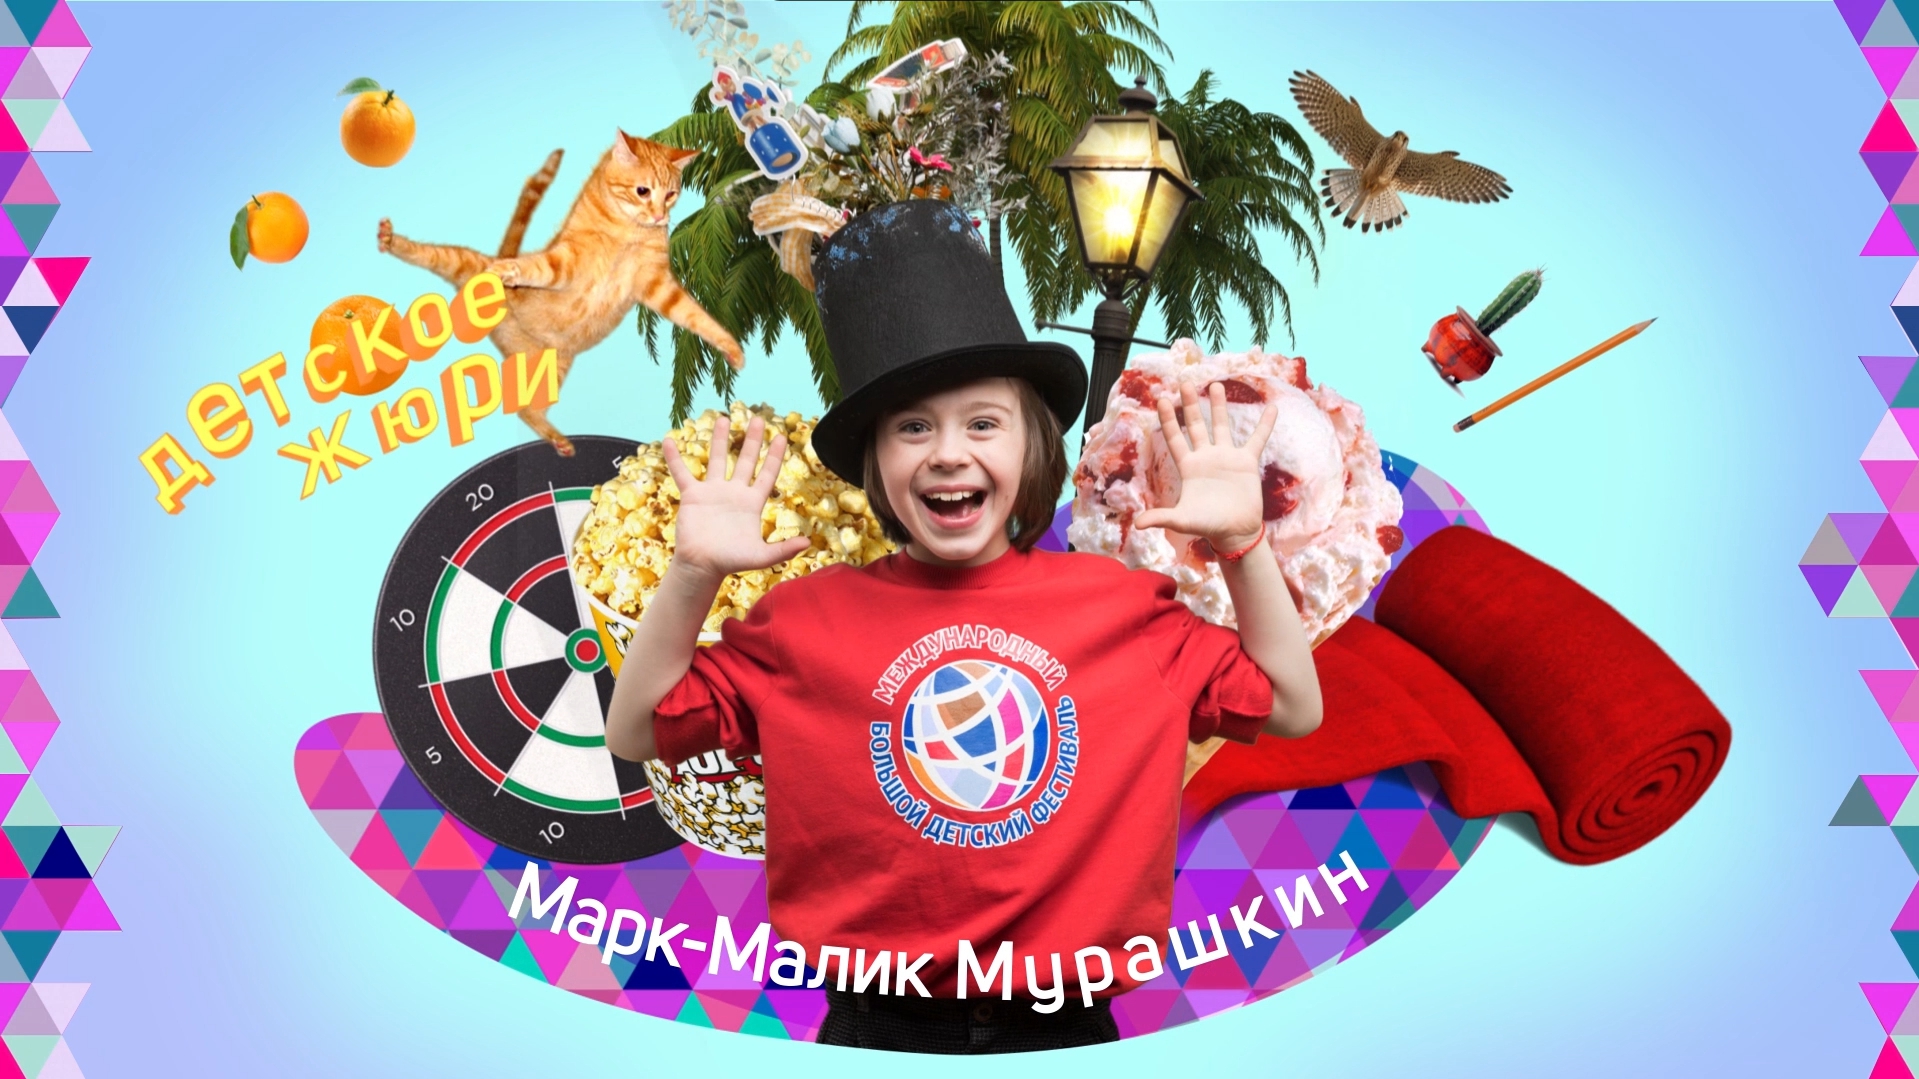 Марк-Малик Мурашкин, председатель детского жюри